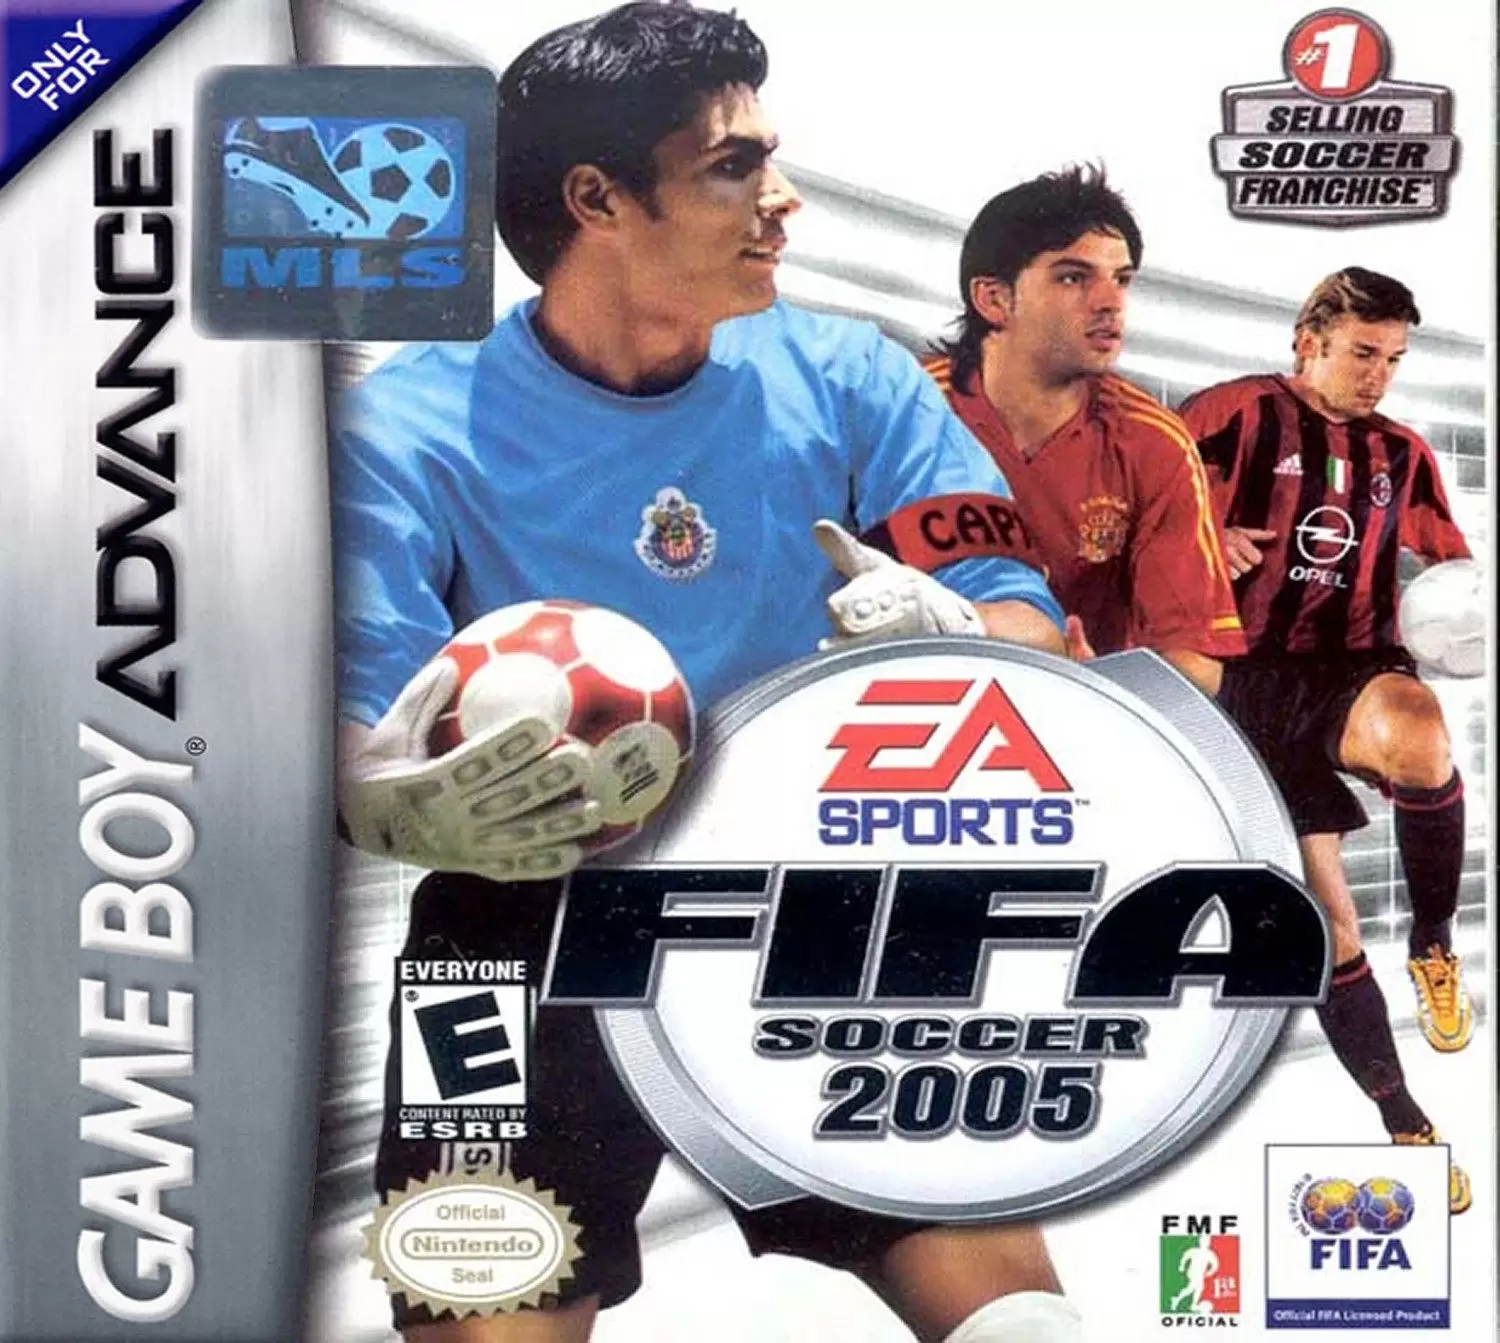 Game Boy Advance Games - FIFA Soccer 2005